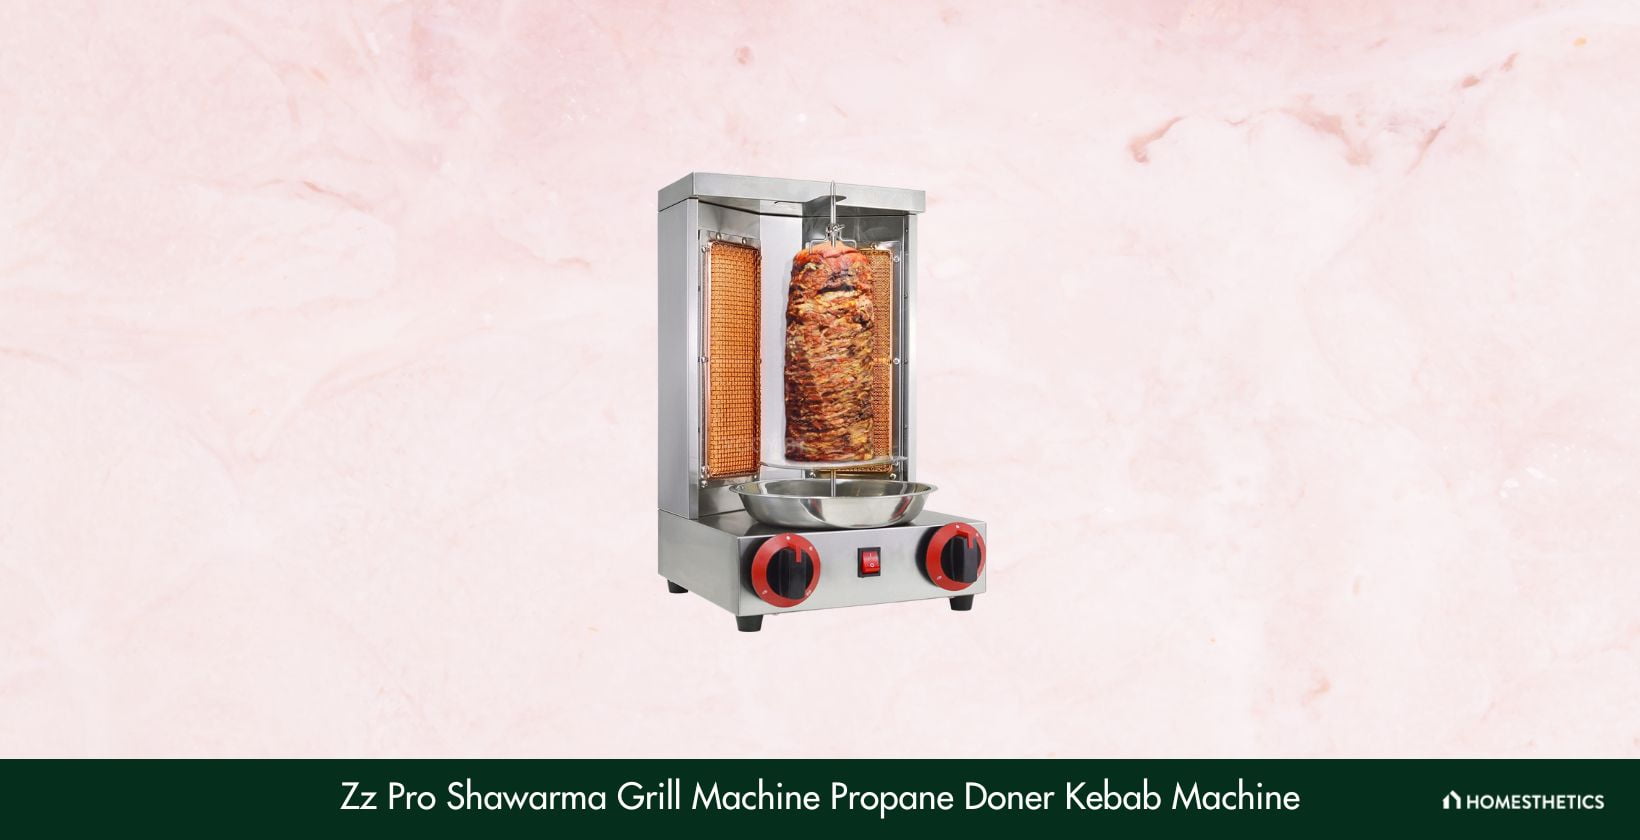 Zz Pro Shawarma Grill Machine Propane Doner Kebab Machine